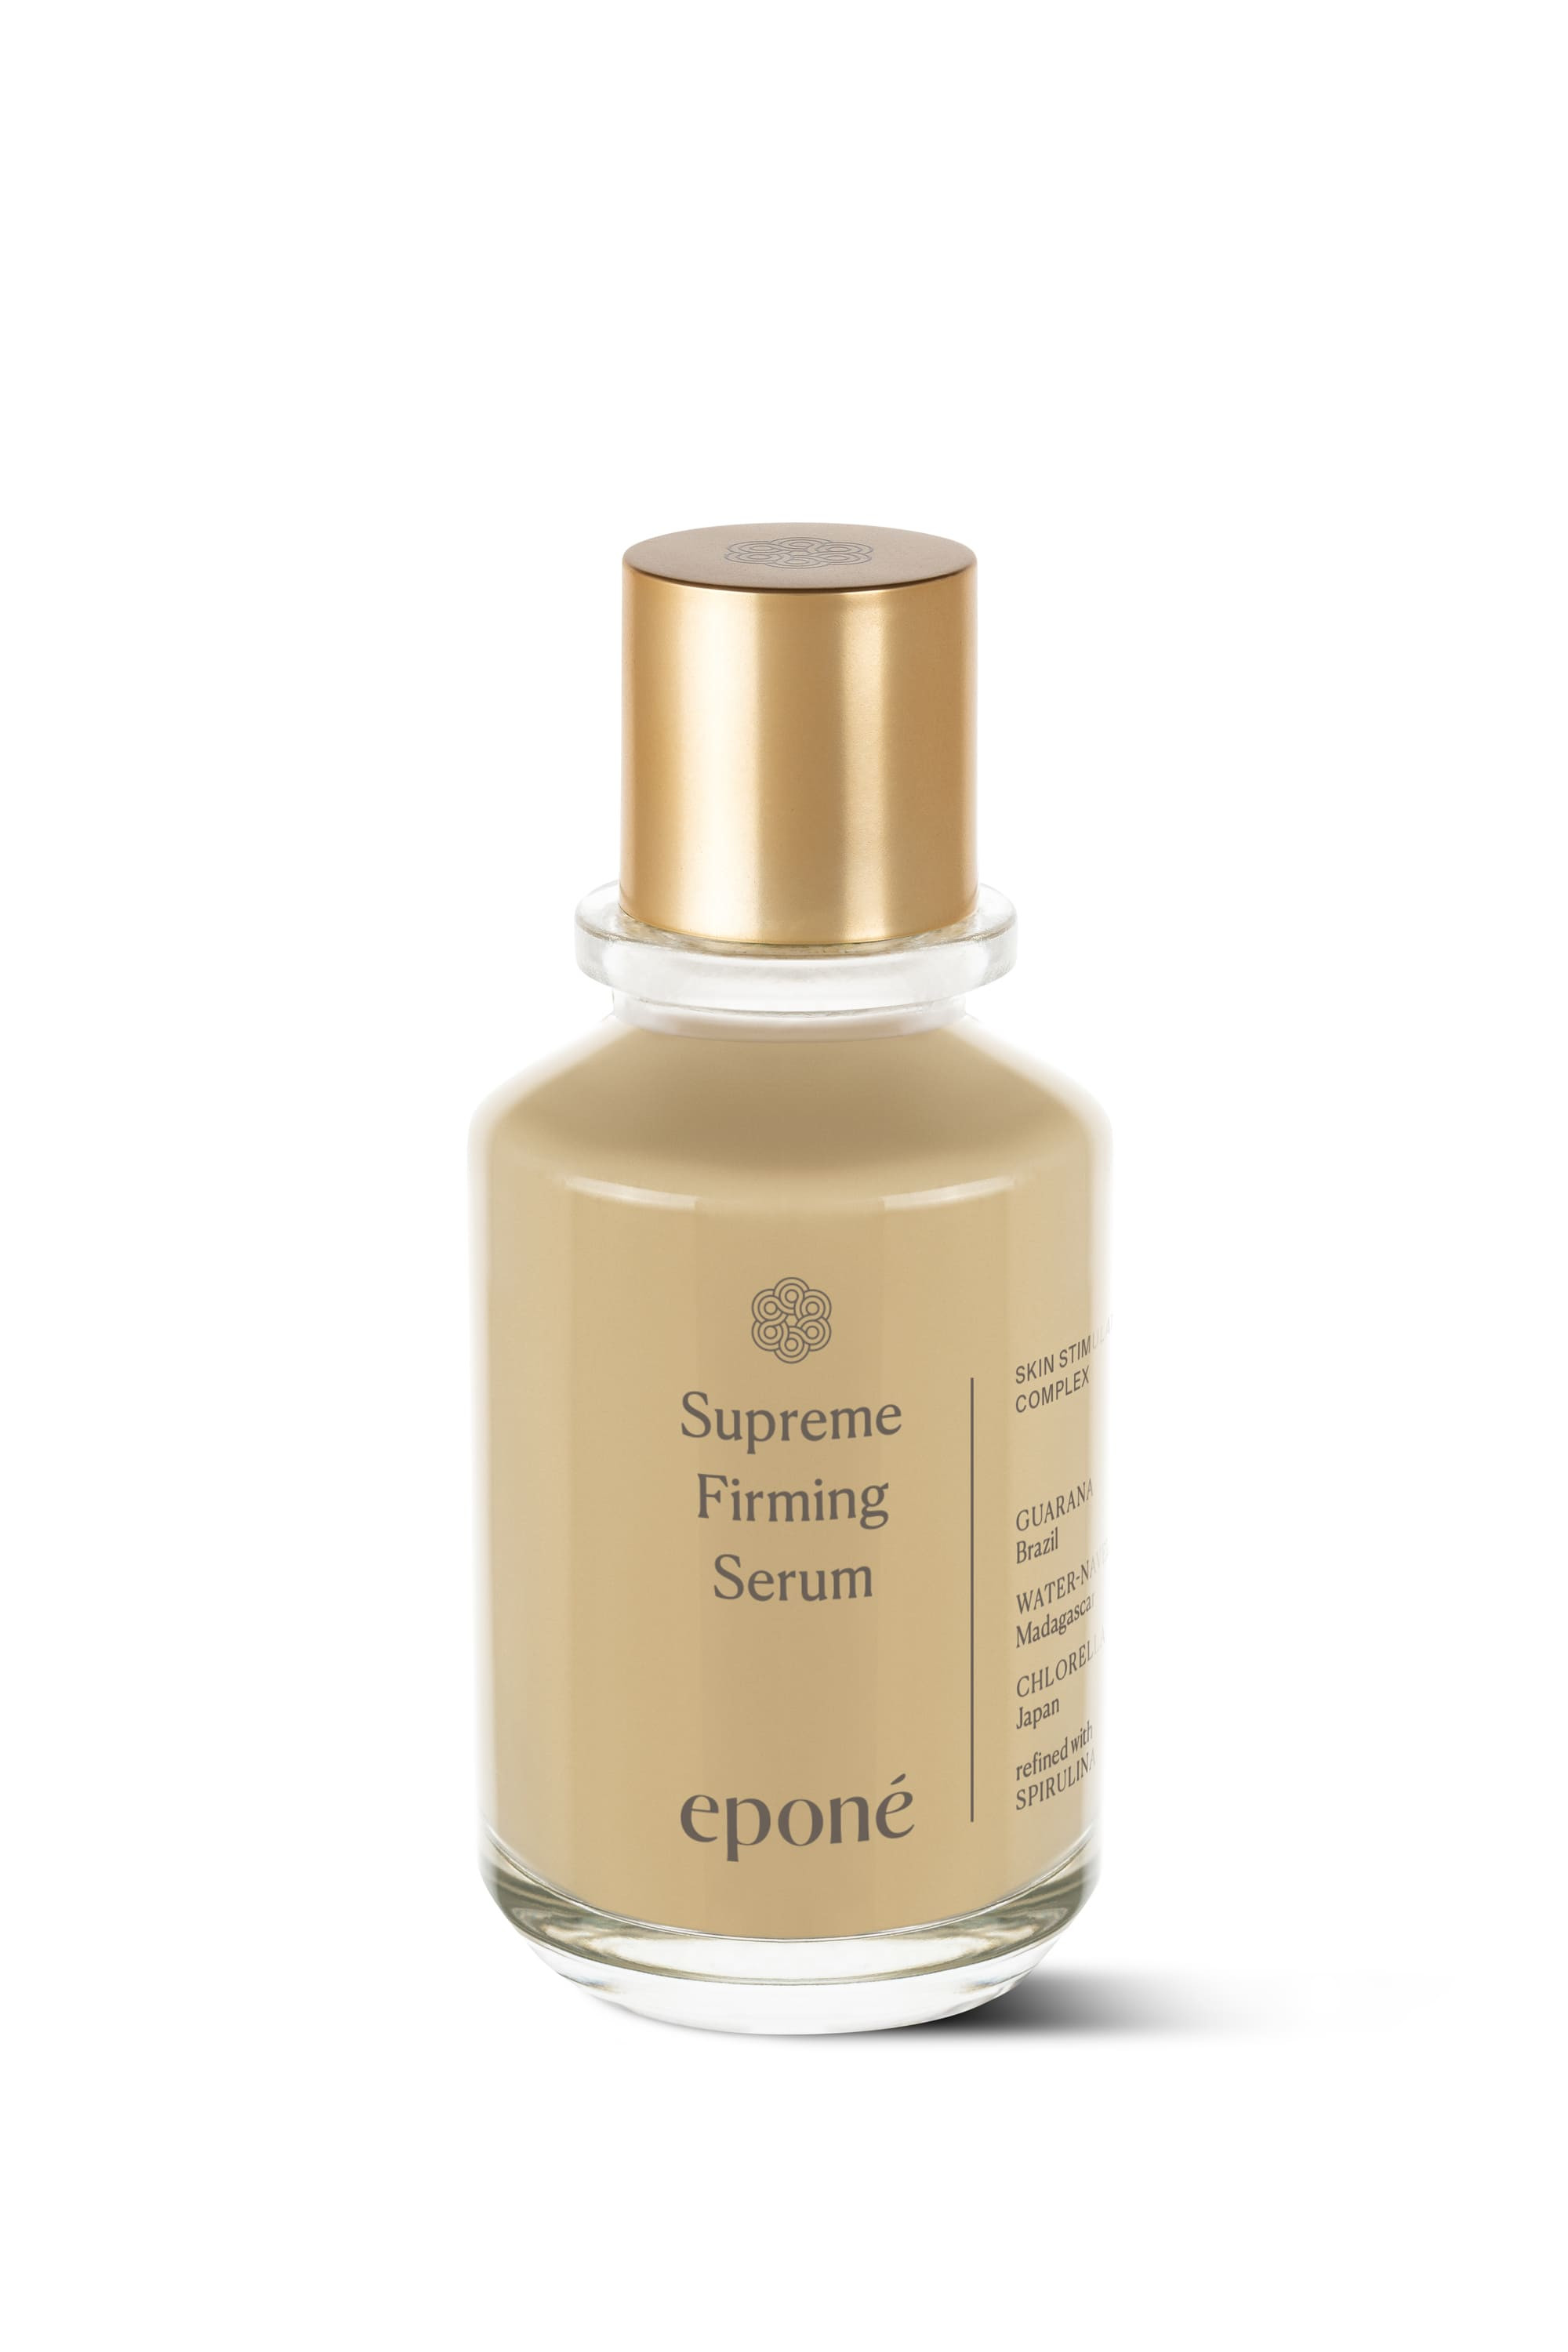 Supreme Firming Serum – Eponé